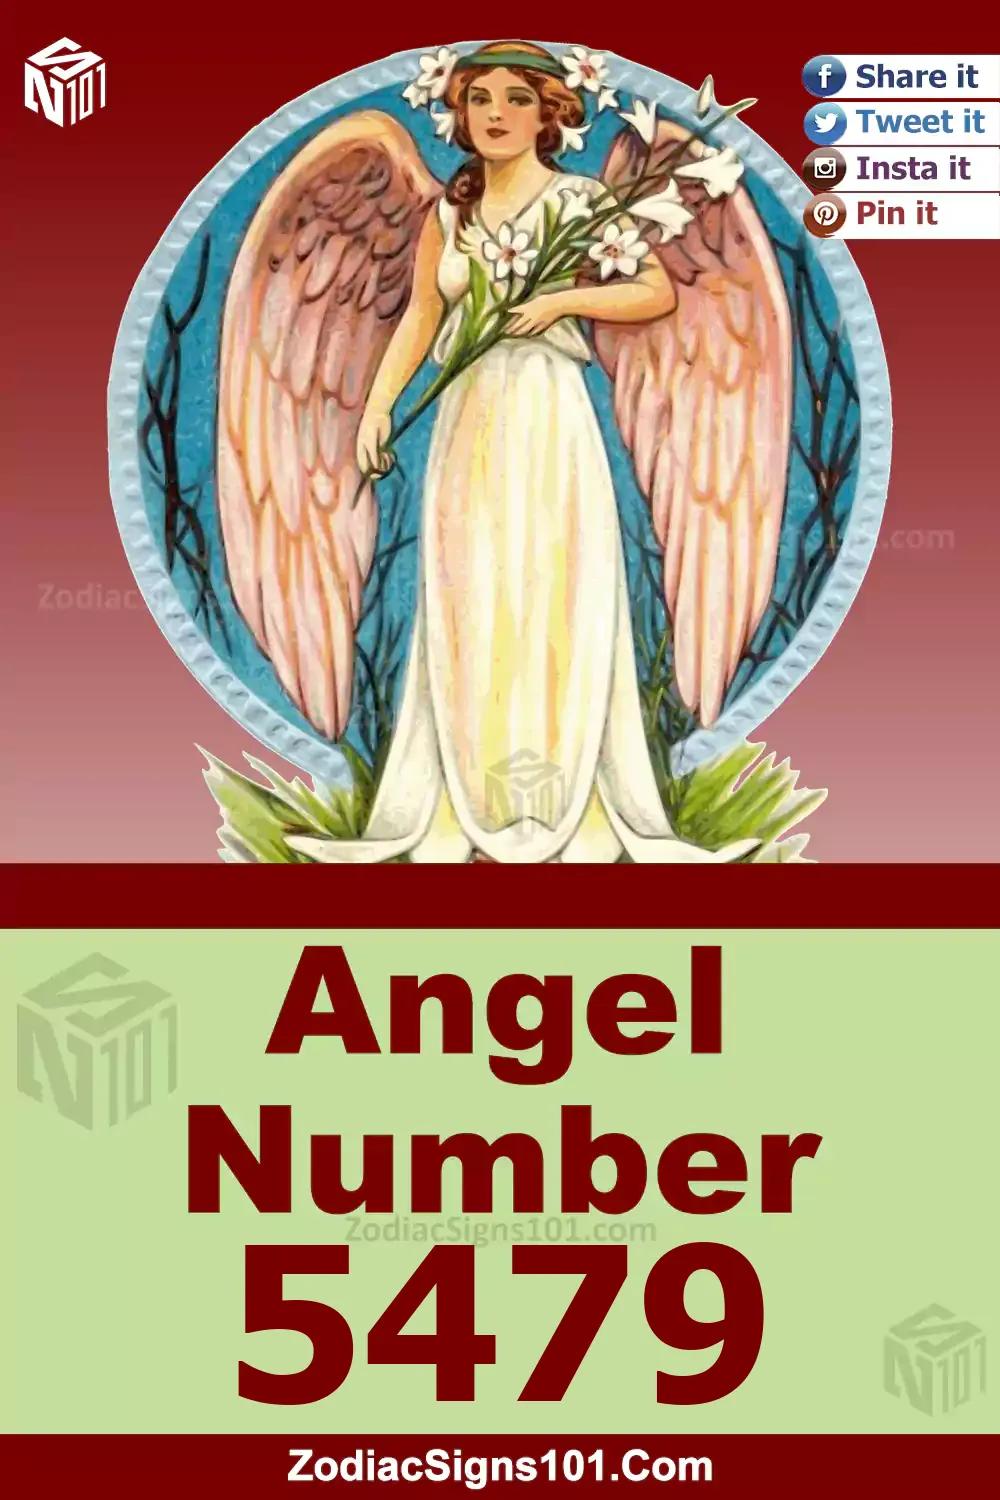 5479-Angel-Number-Meaning.jpg